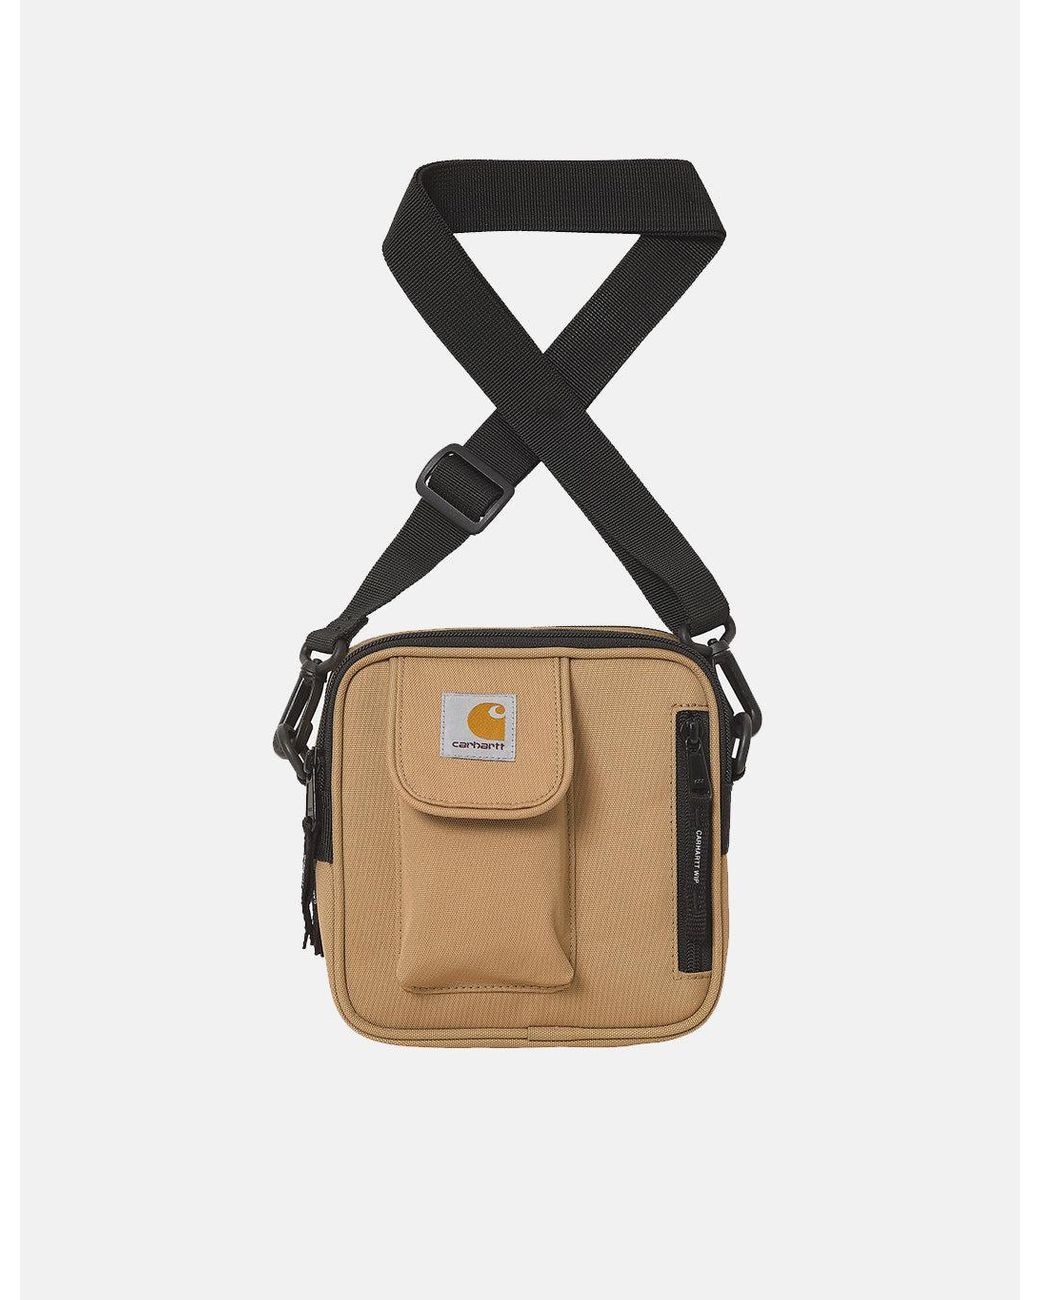 Carhartt Wip Watts Essentials Bag in Black | Lyst